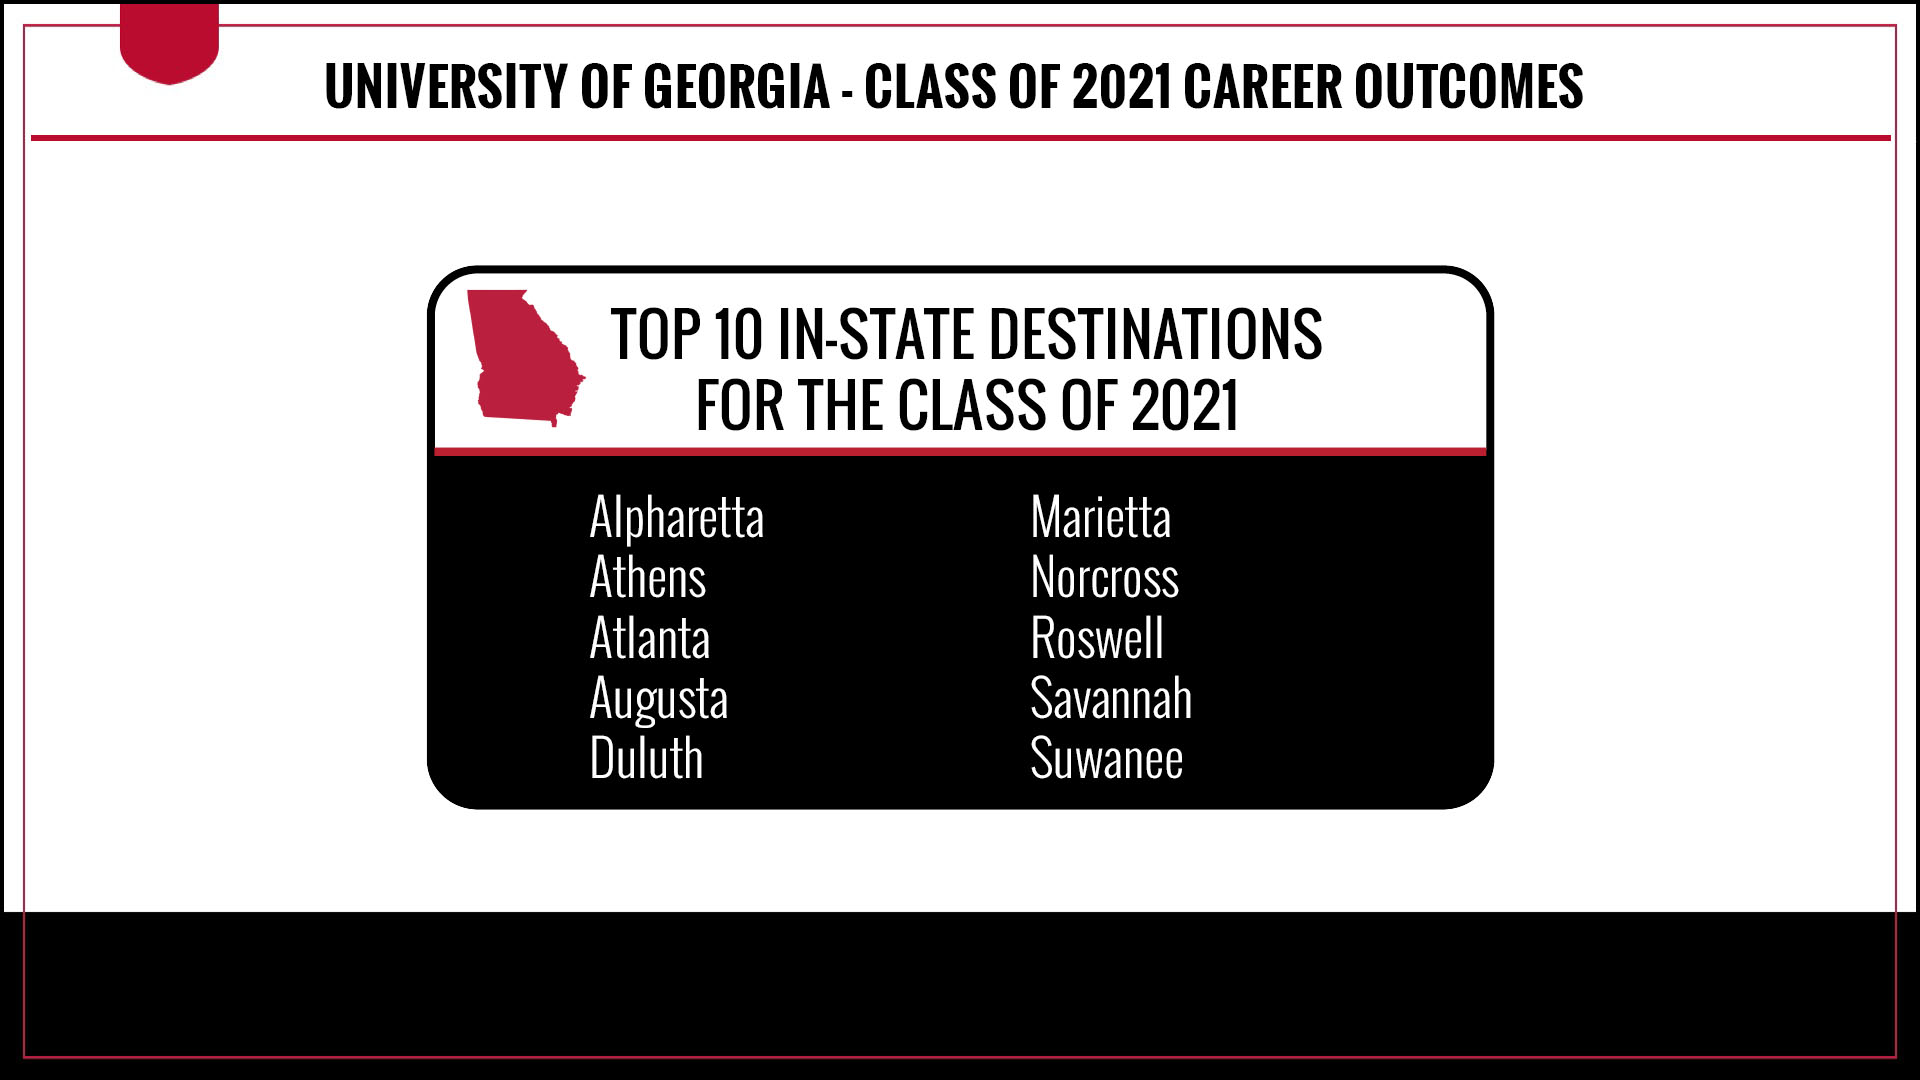 Top In-State destinations for UGA Class of 2021 graduates include Alpharetta, Athens, Atlanta, Augusta, Duluth, Marietta, Norcross, Roswell, Savannah, and Suwanee